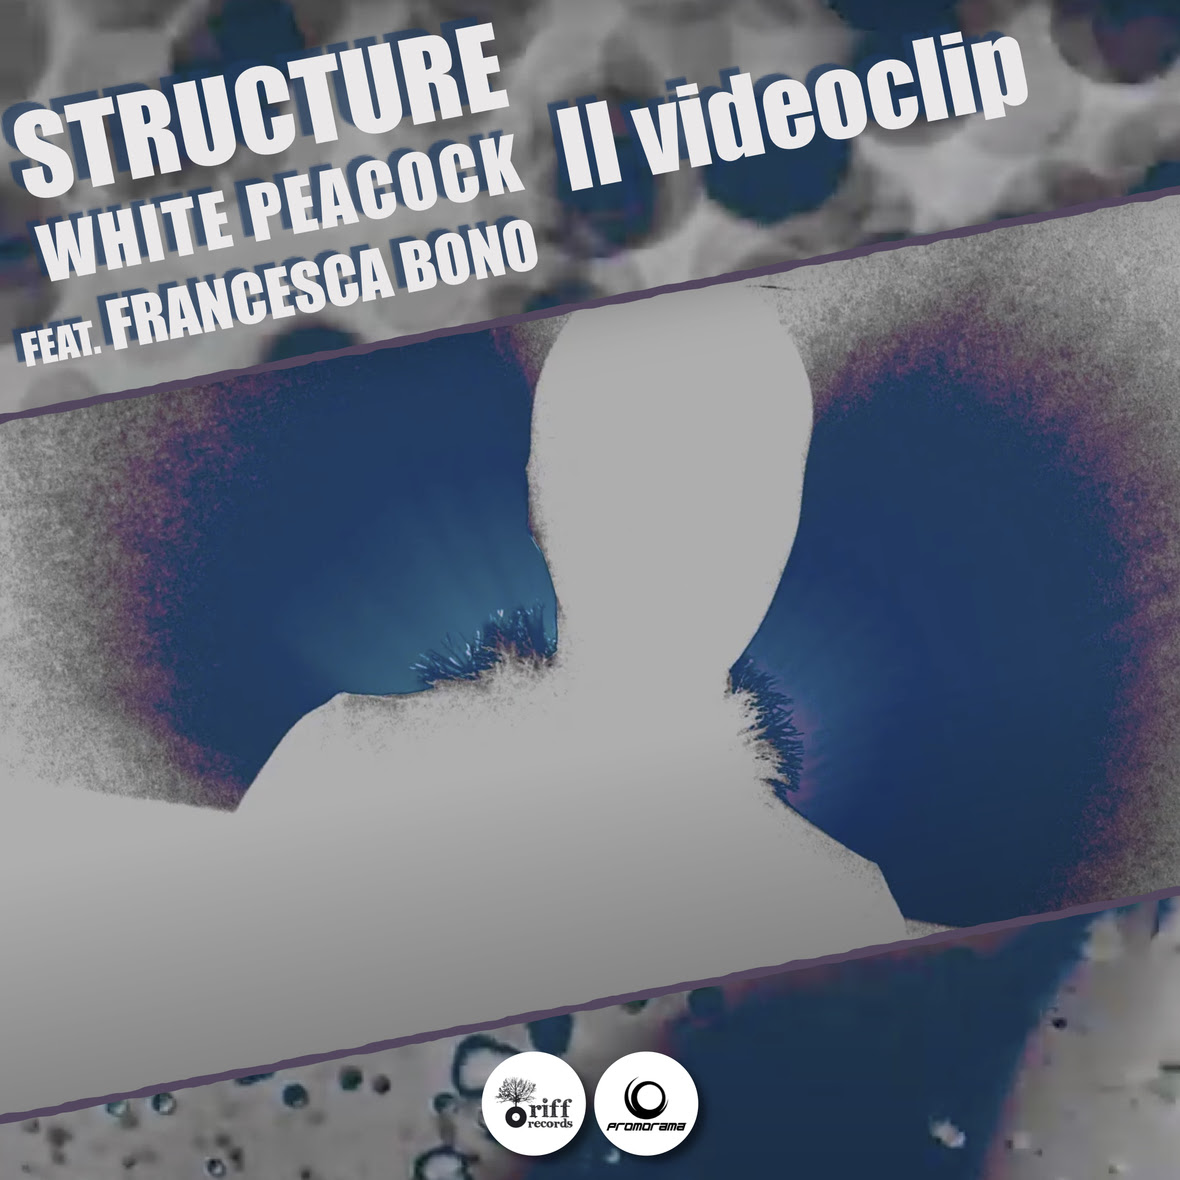 Structure - White Peacock videoclip